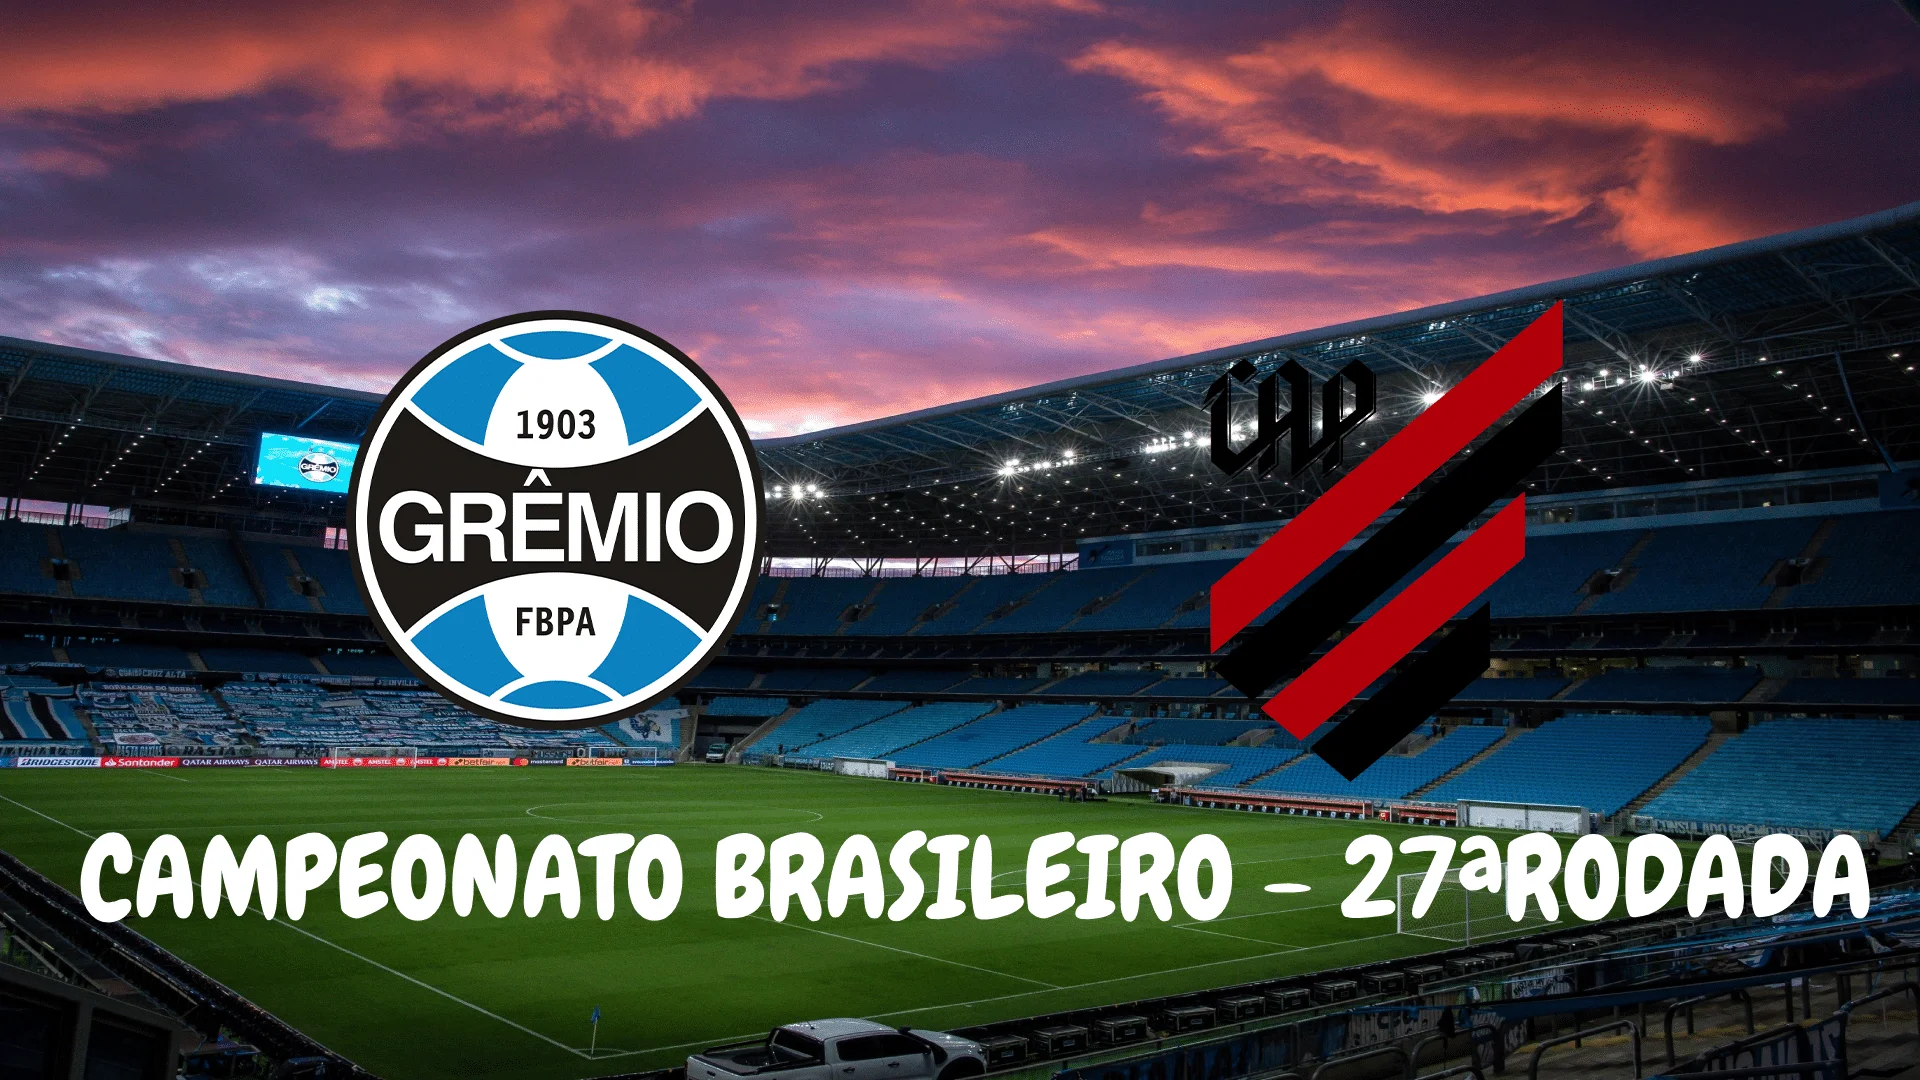 Grêmio vs Caxias: A Clash of Rivals